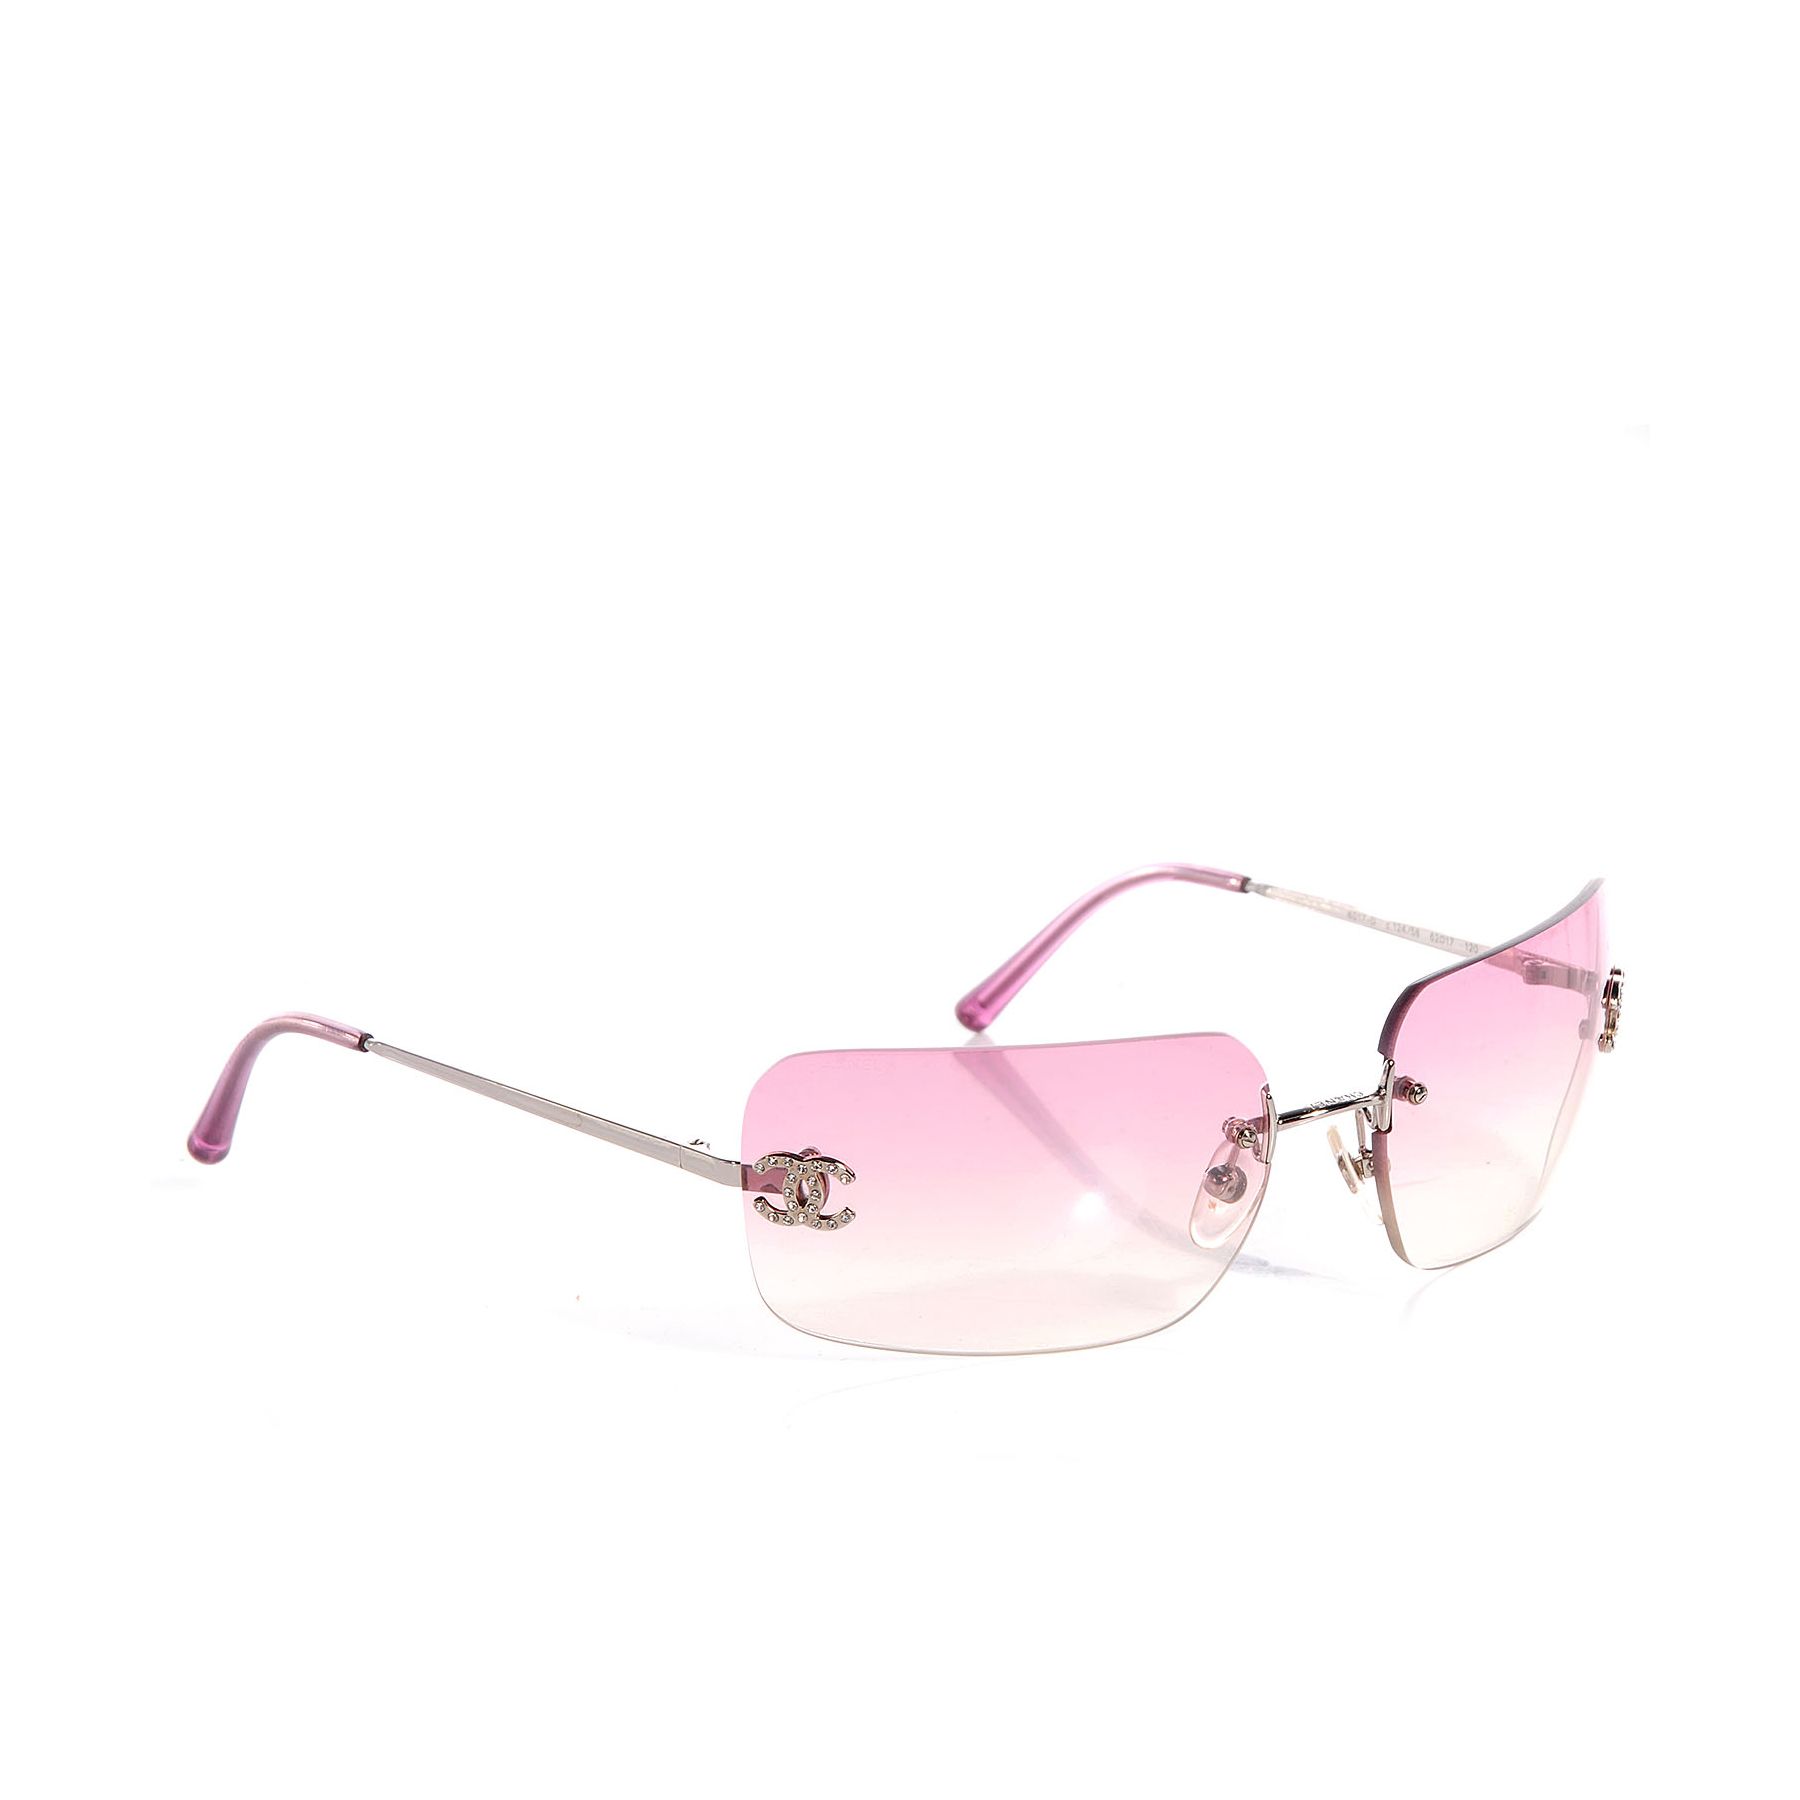 Chanel Chanel Swarovski Rhinestone Pink Tinted Silver Sunglasses